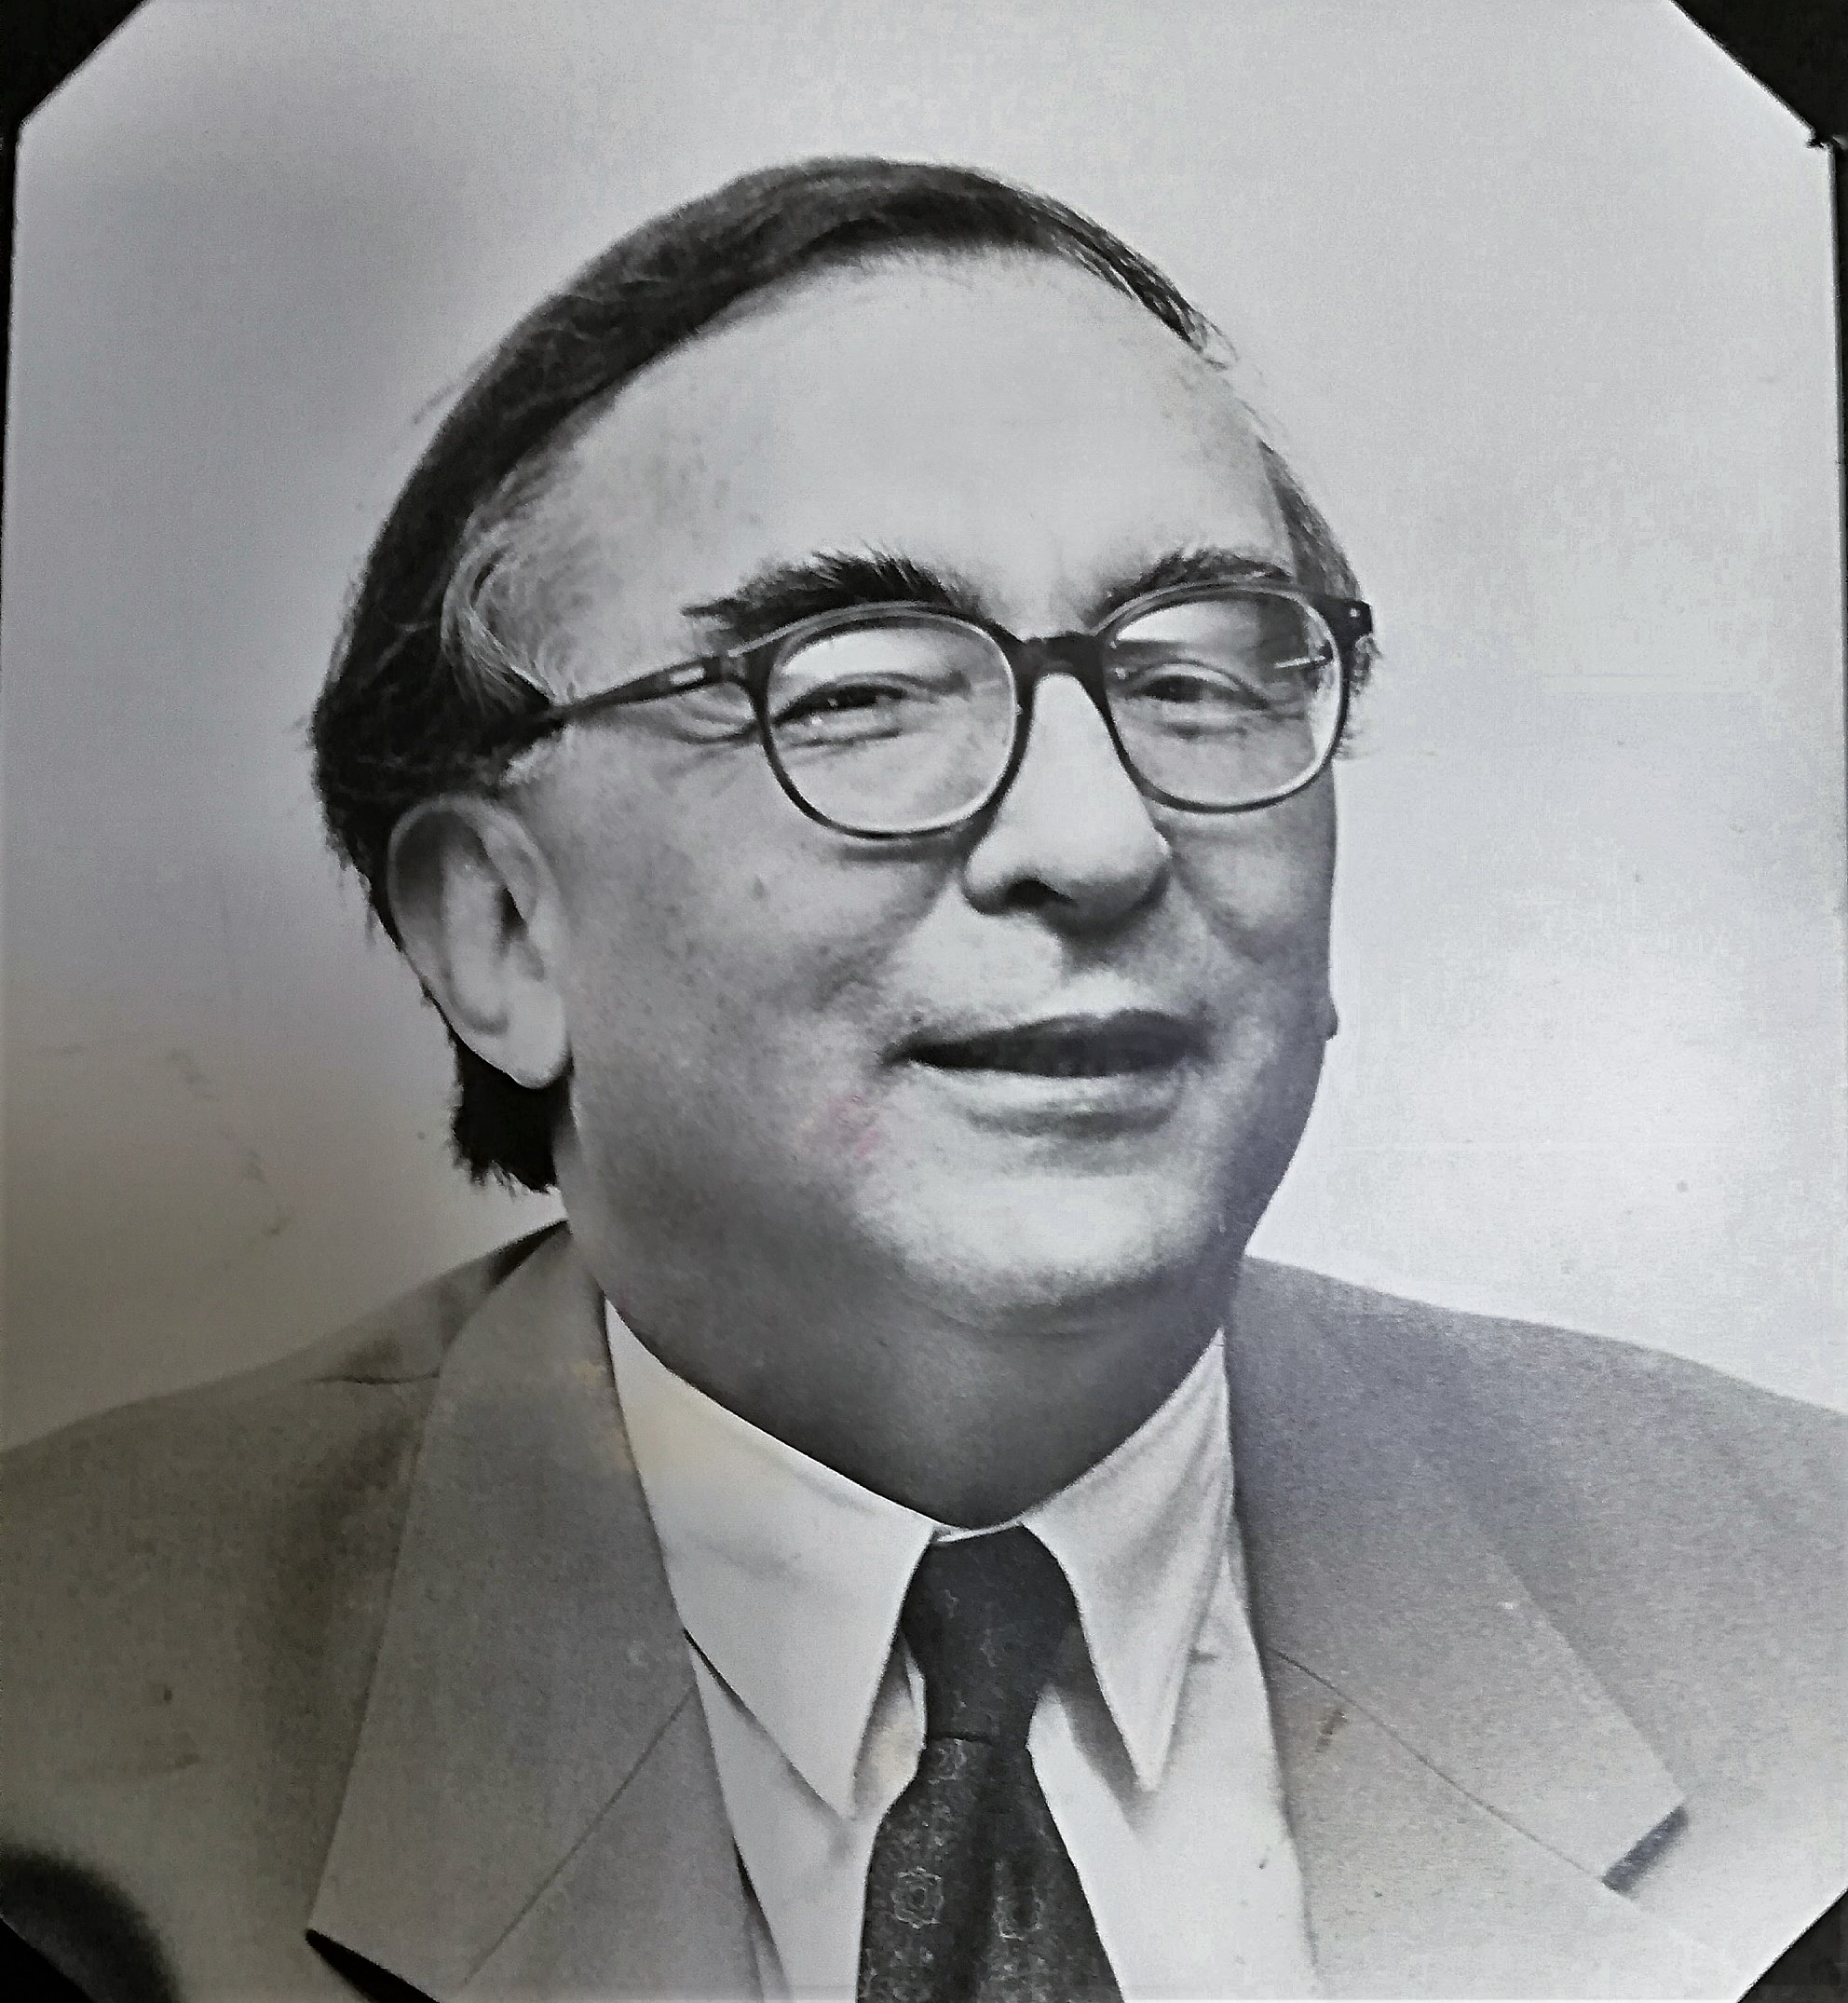 Gerardo Bedoya Borrero